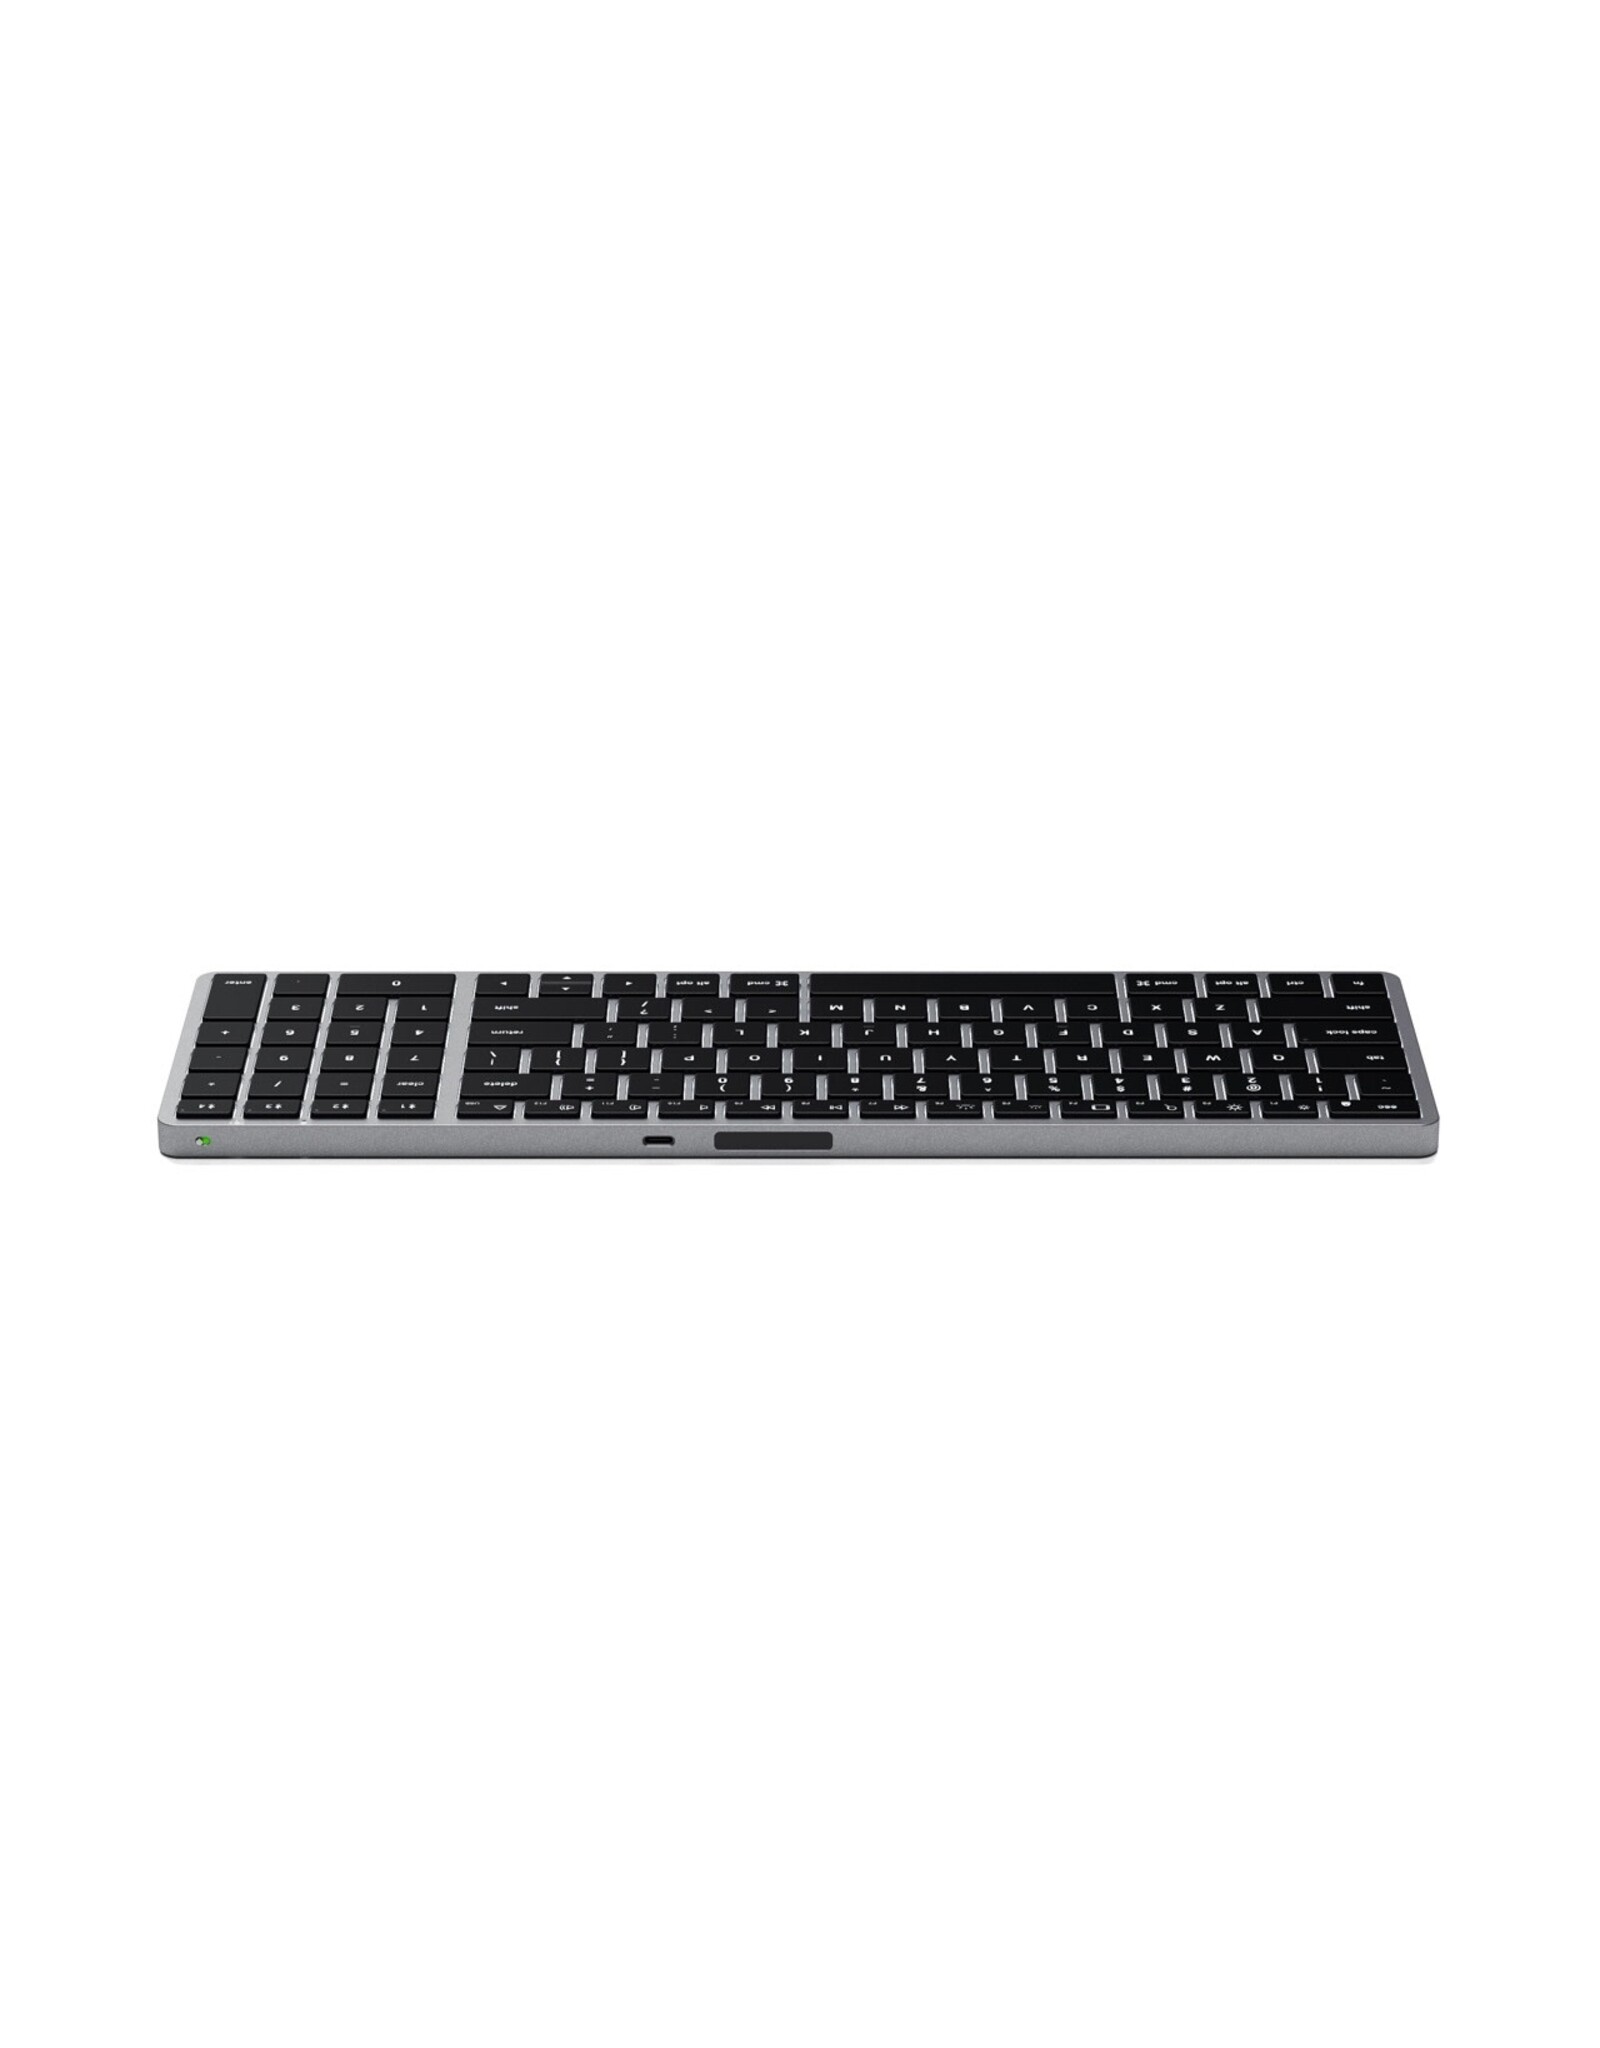 Satechi Satechi Slim X2 Bluetooth Backlit Keyboard - Space Grey